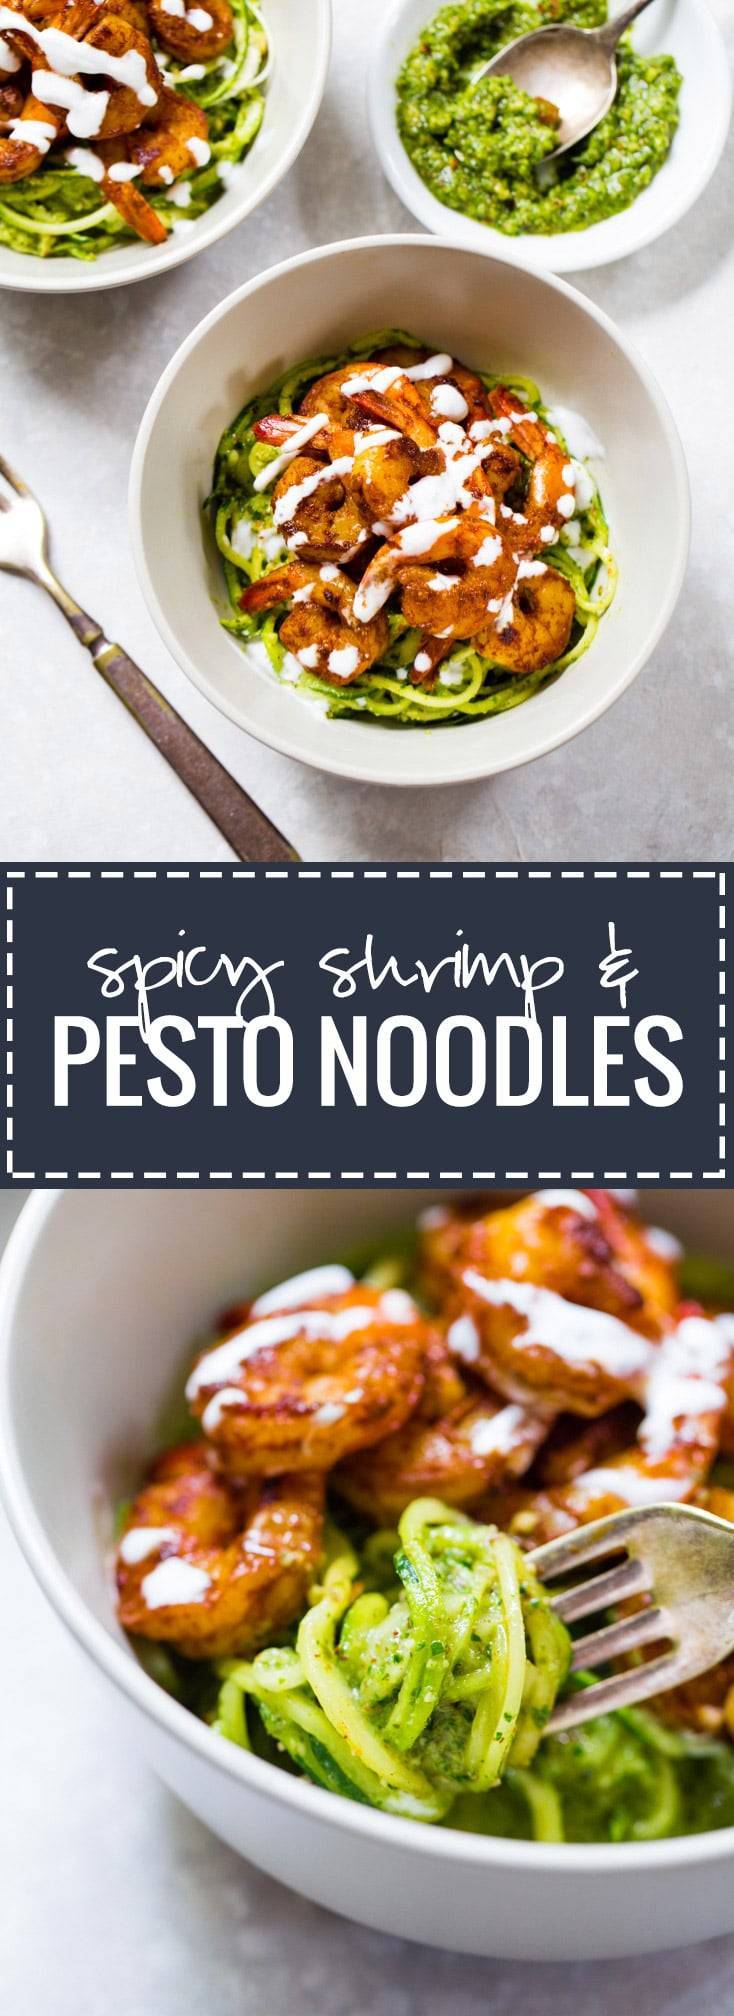 Spicy-Shrimp-with-Pesto-Noodles